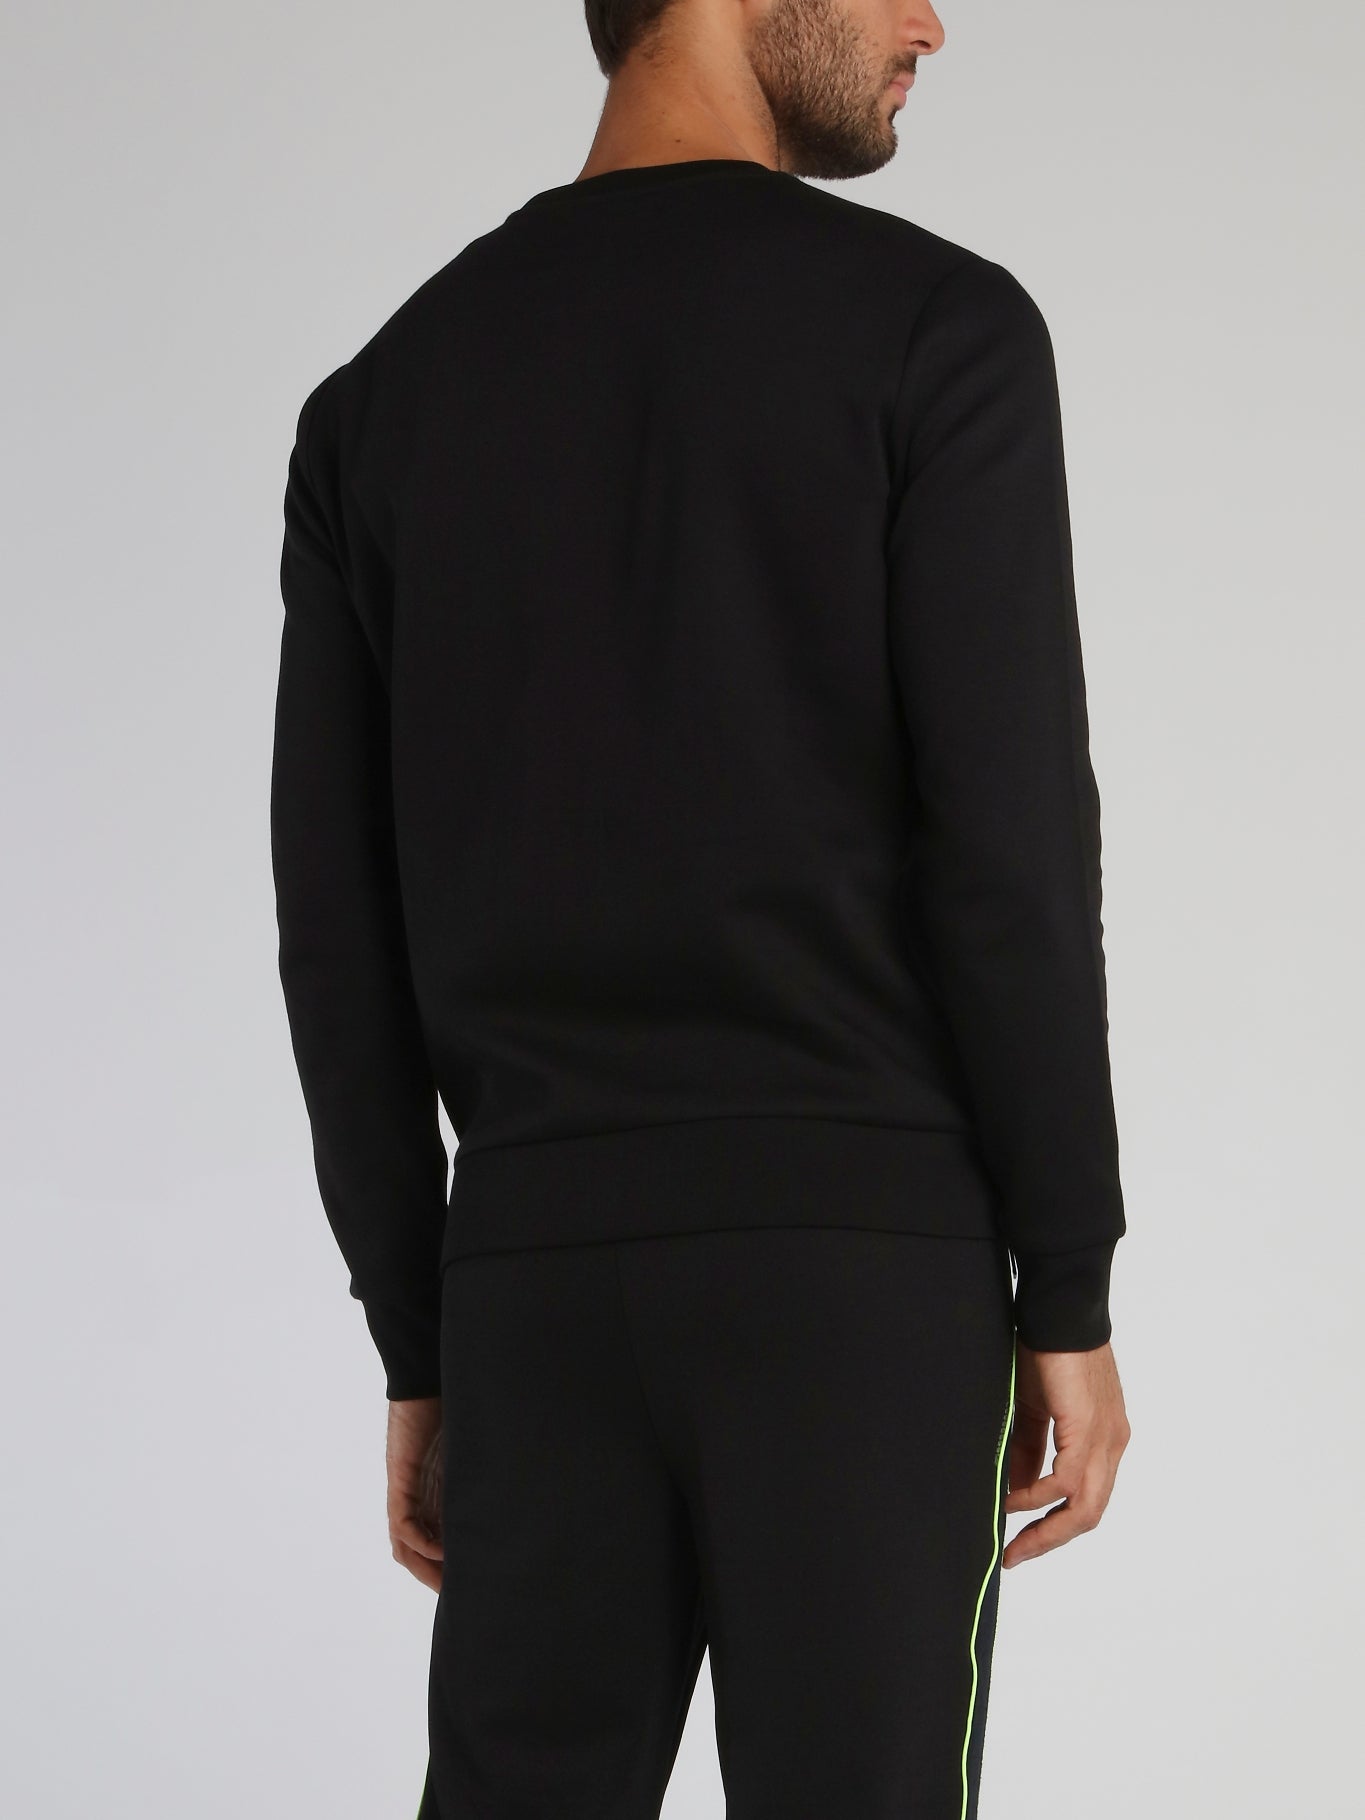 Black With Large Monogram Sweatshirt